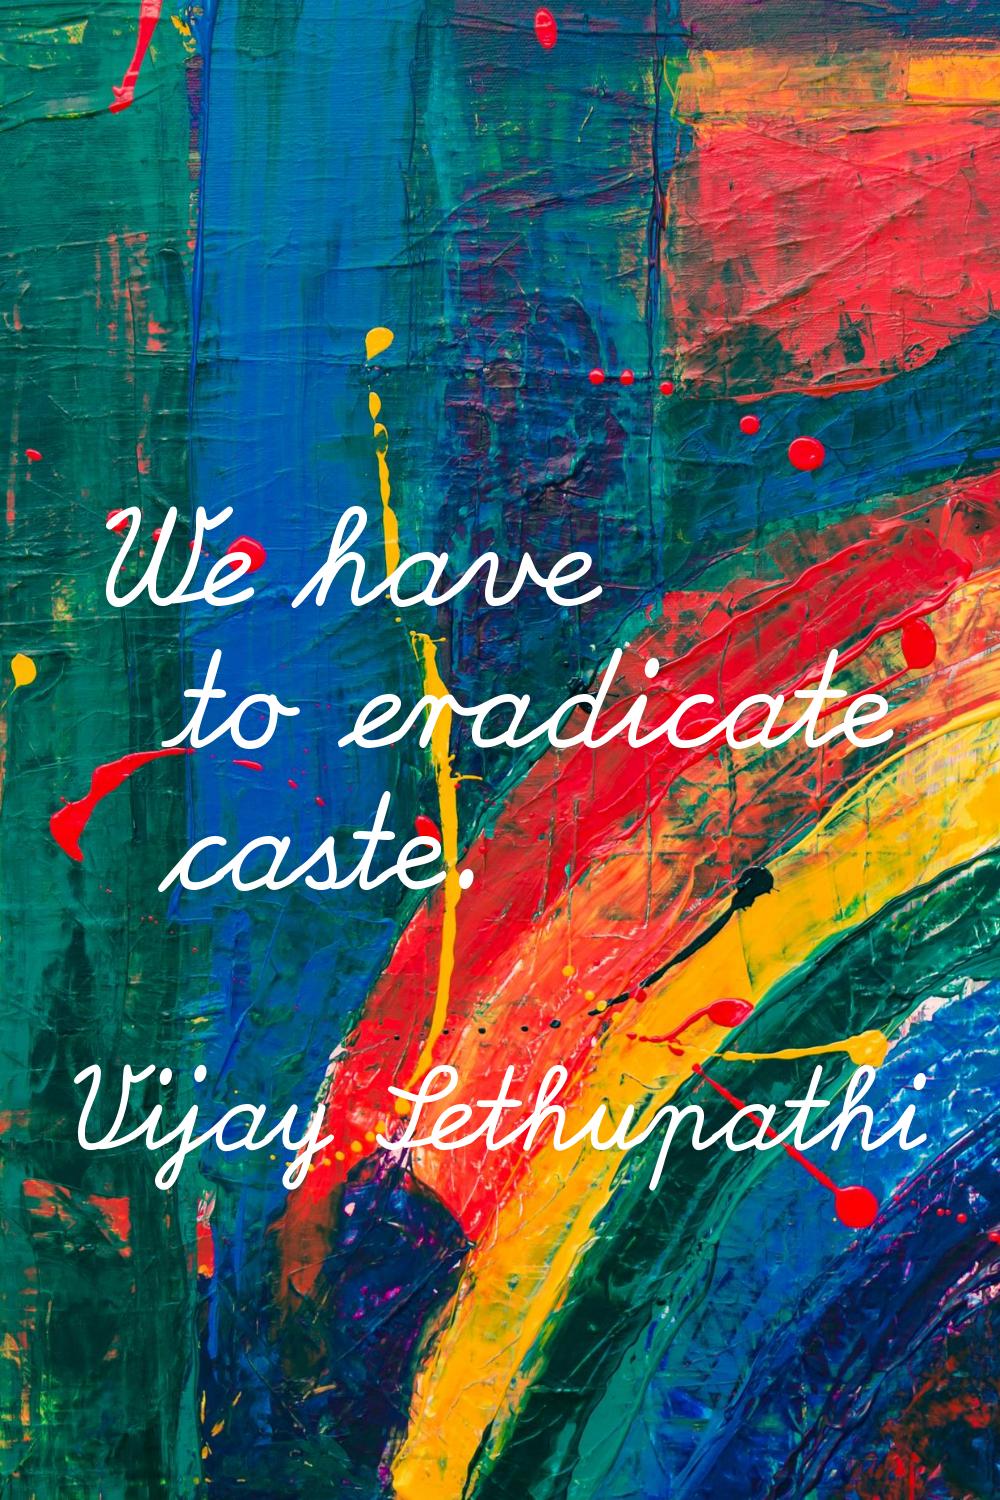 We have to eradicate caste.